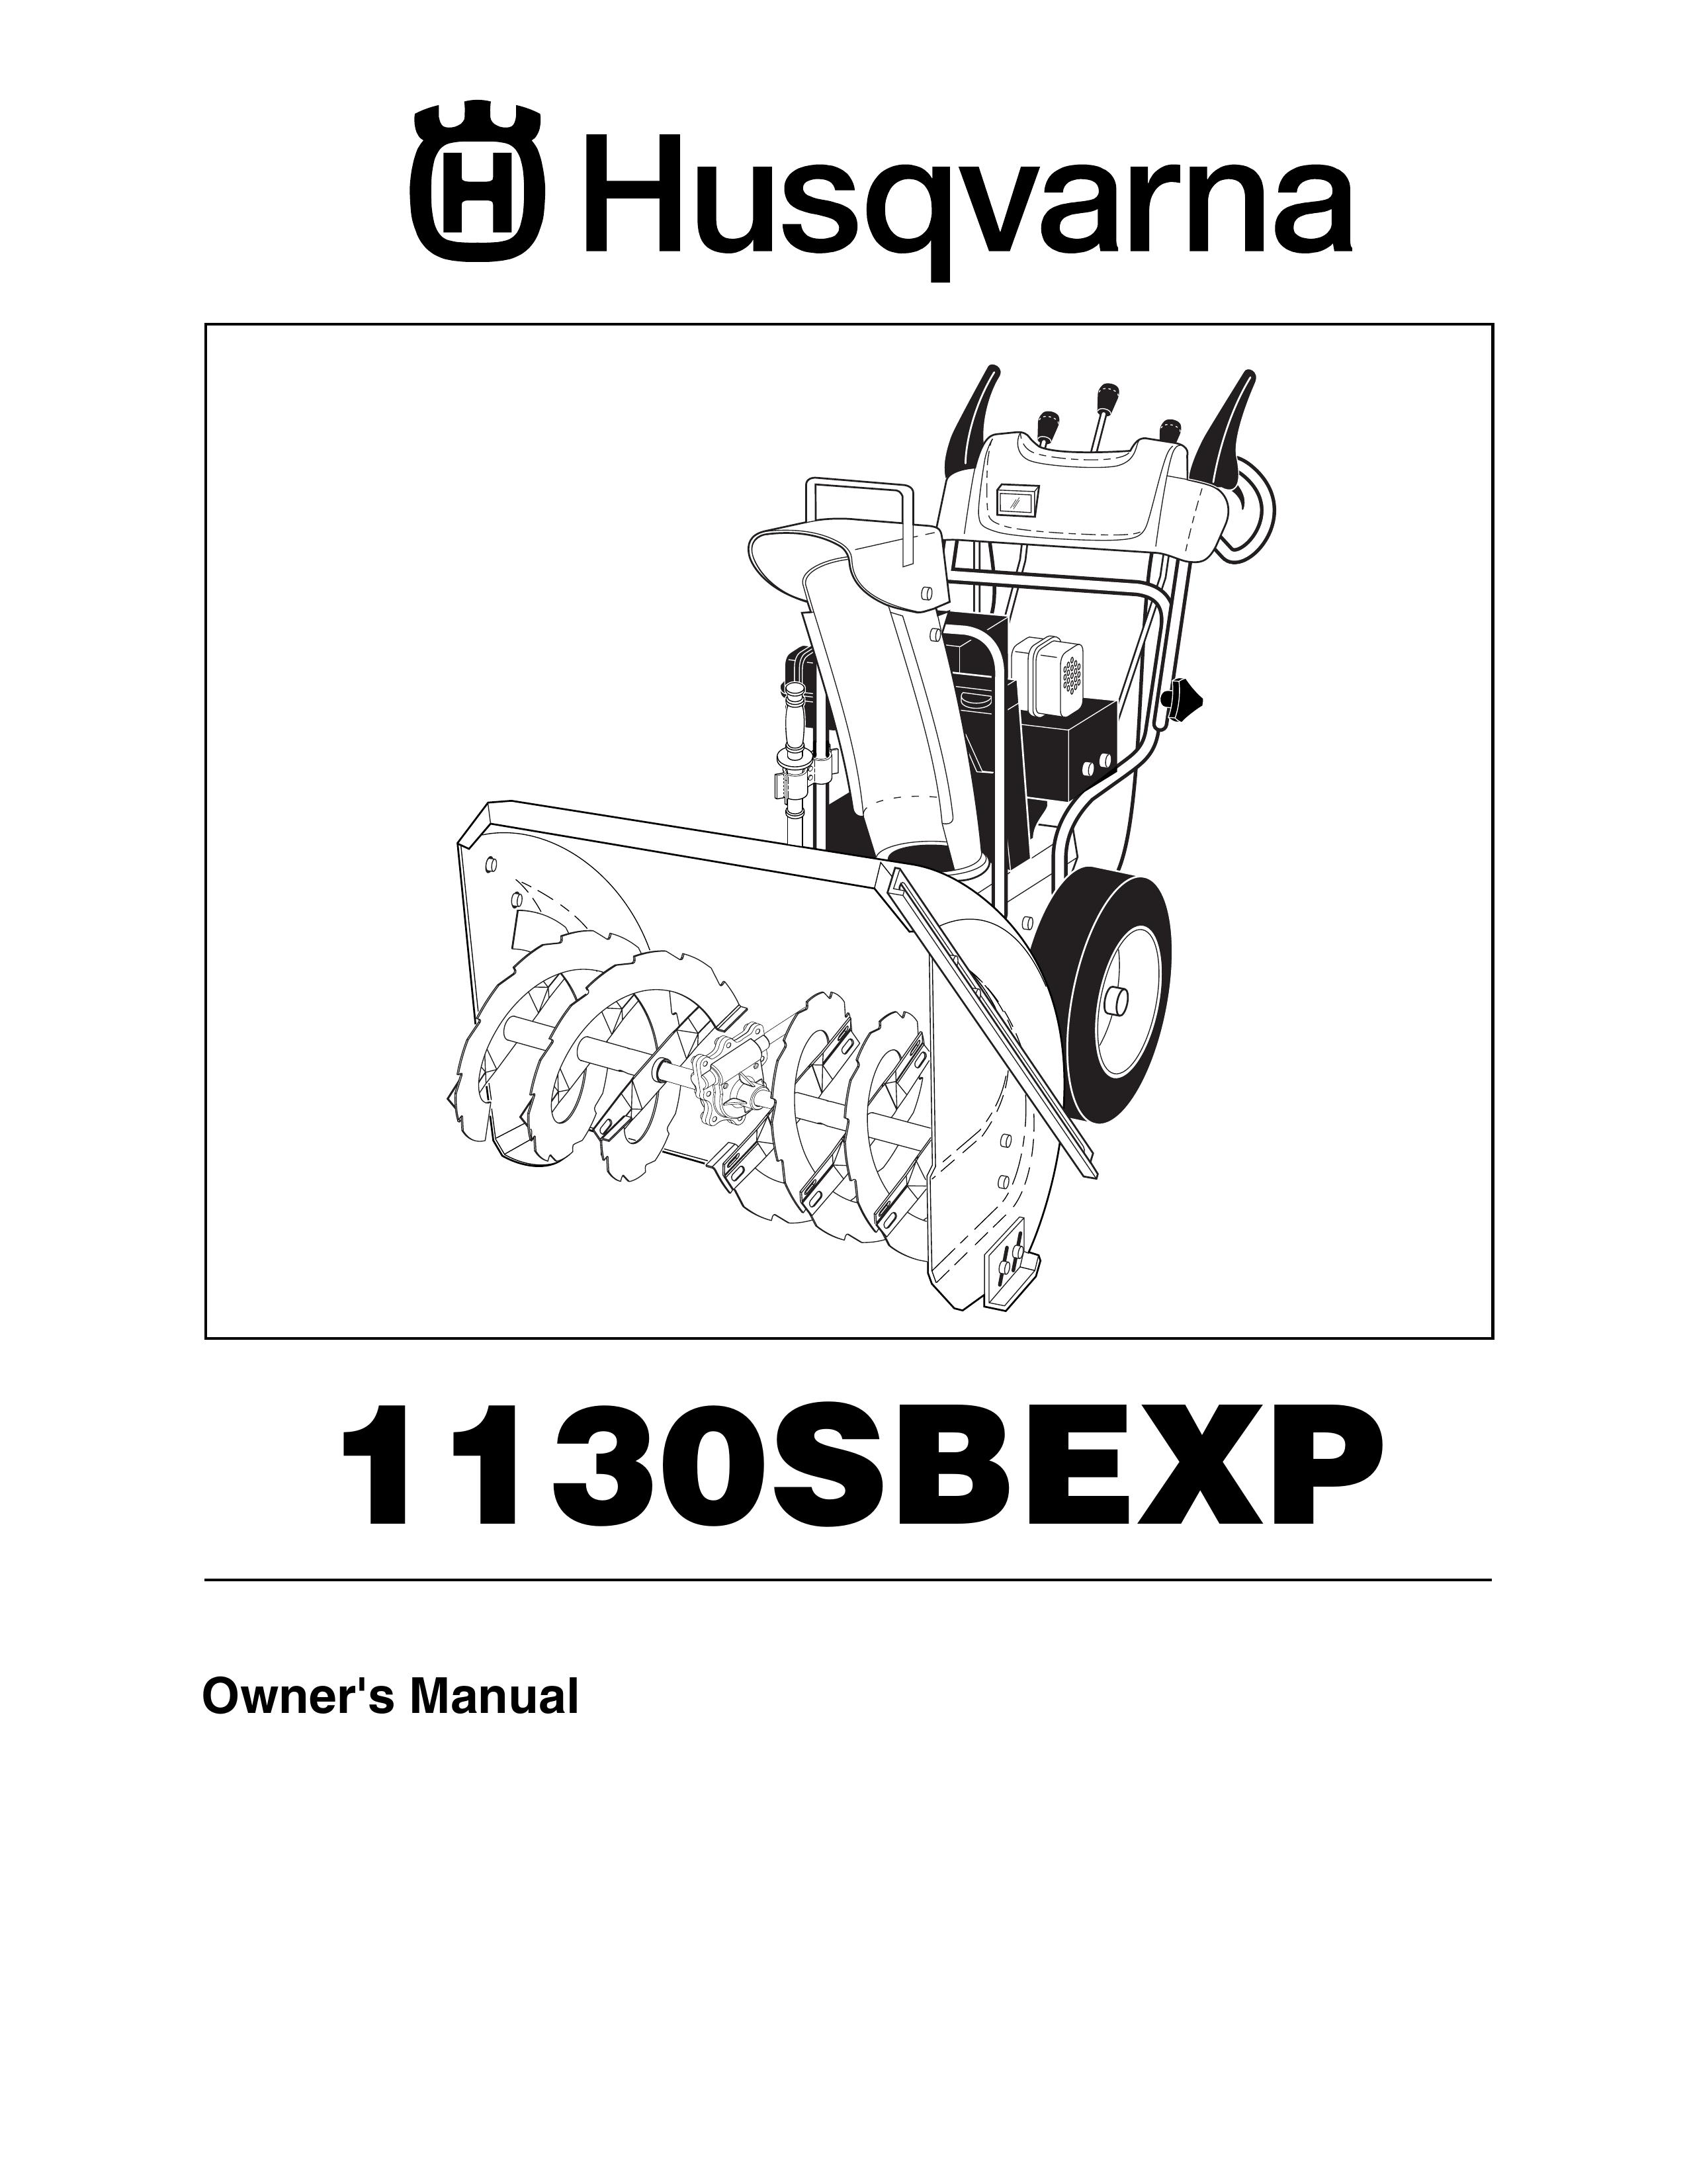 Husqvarna 1130 SBEXP Snow Blower User Manual